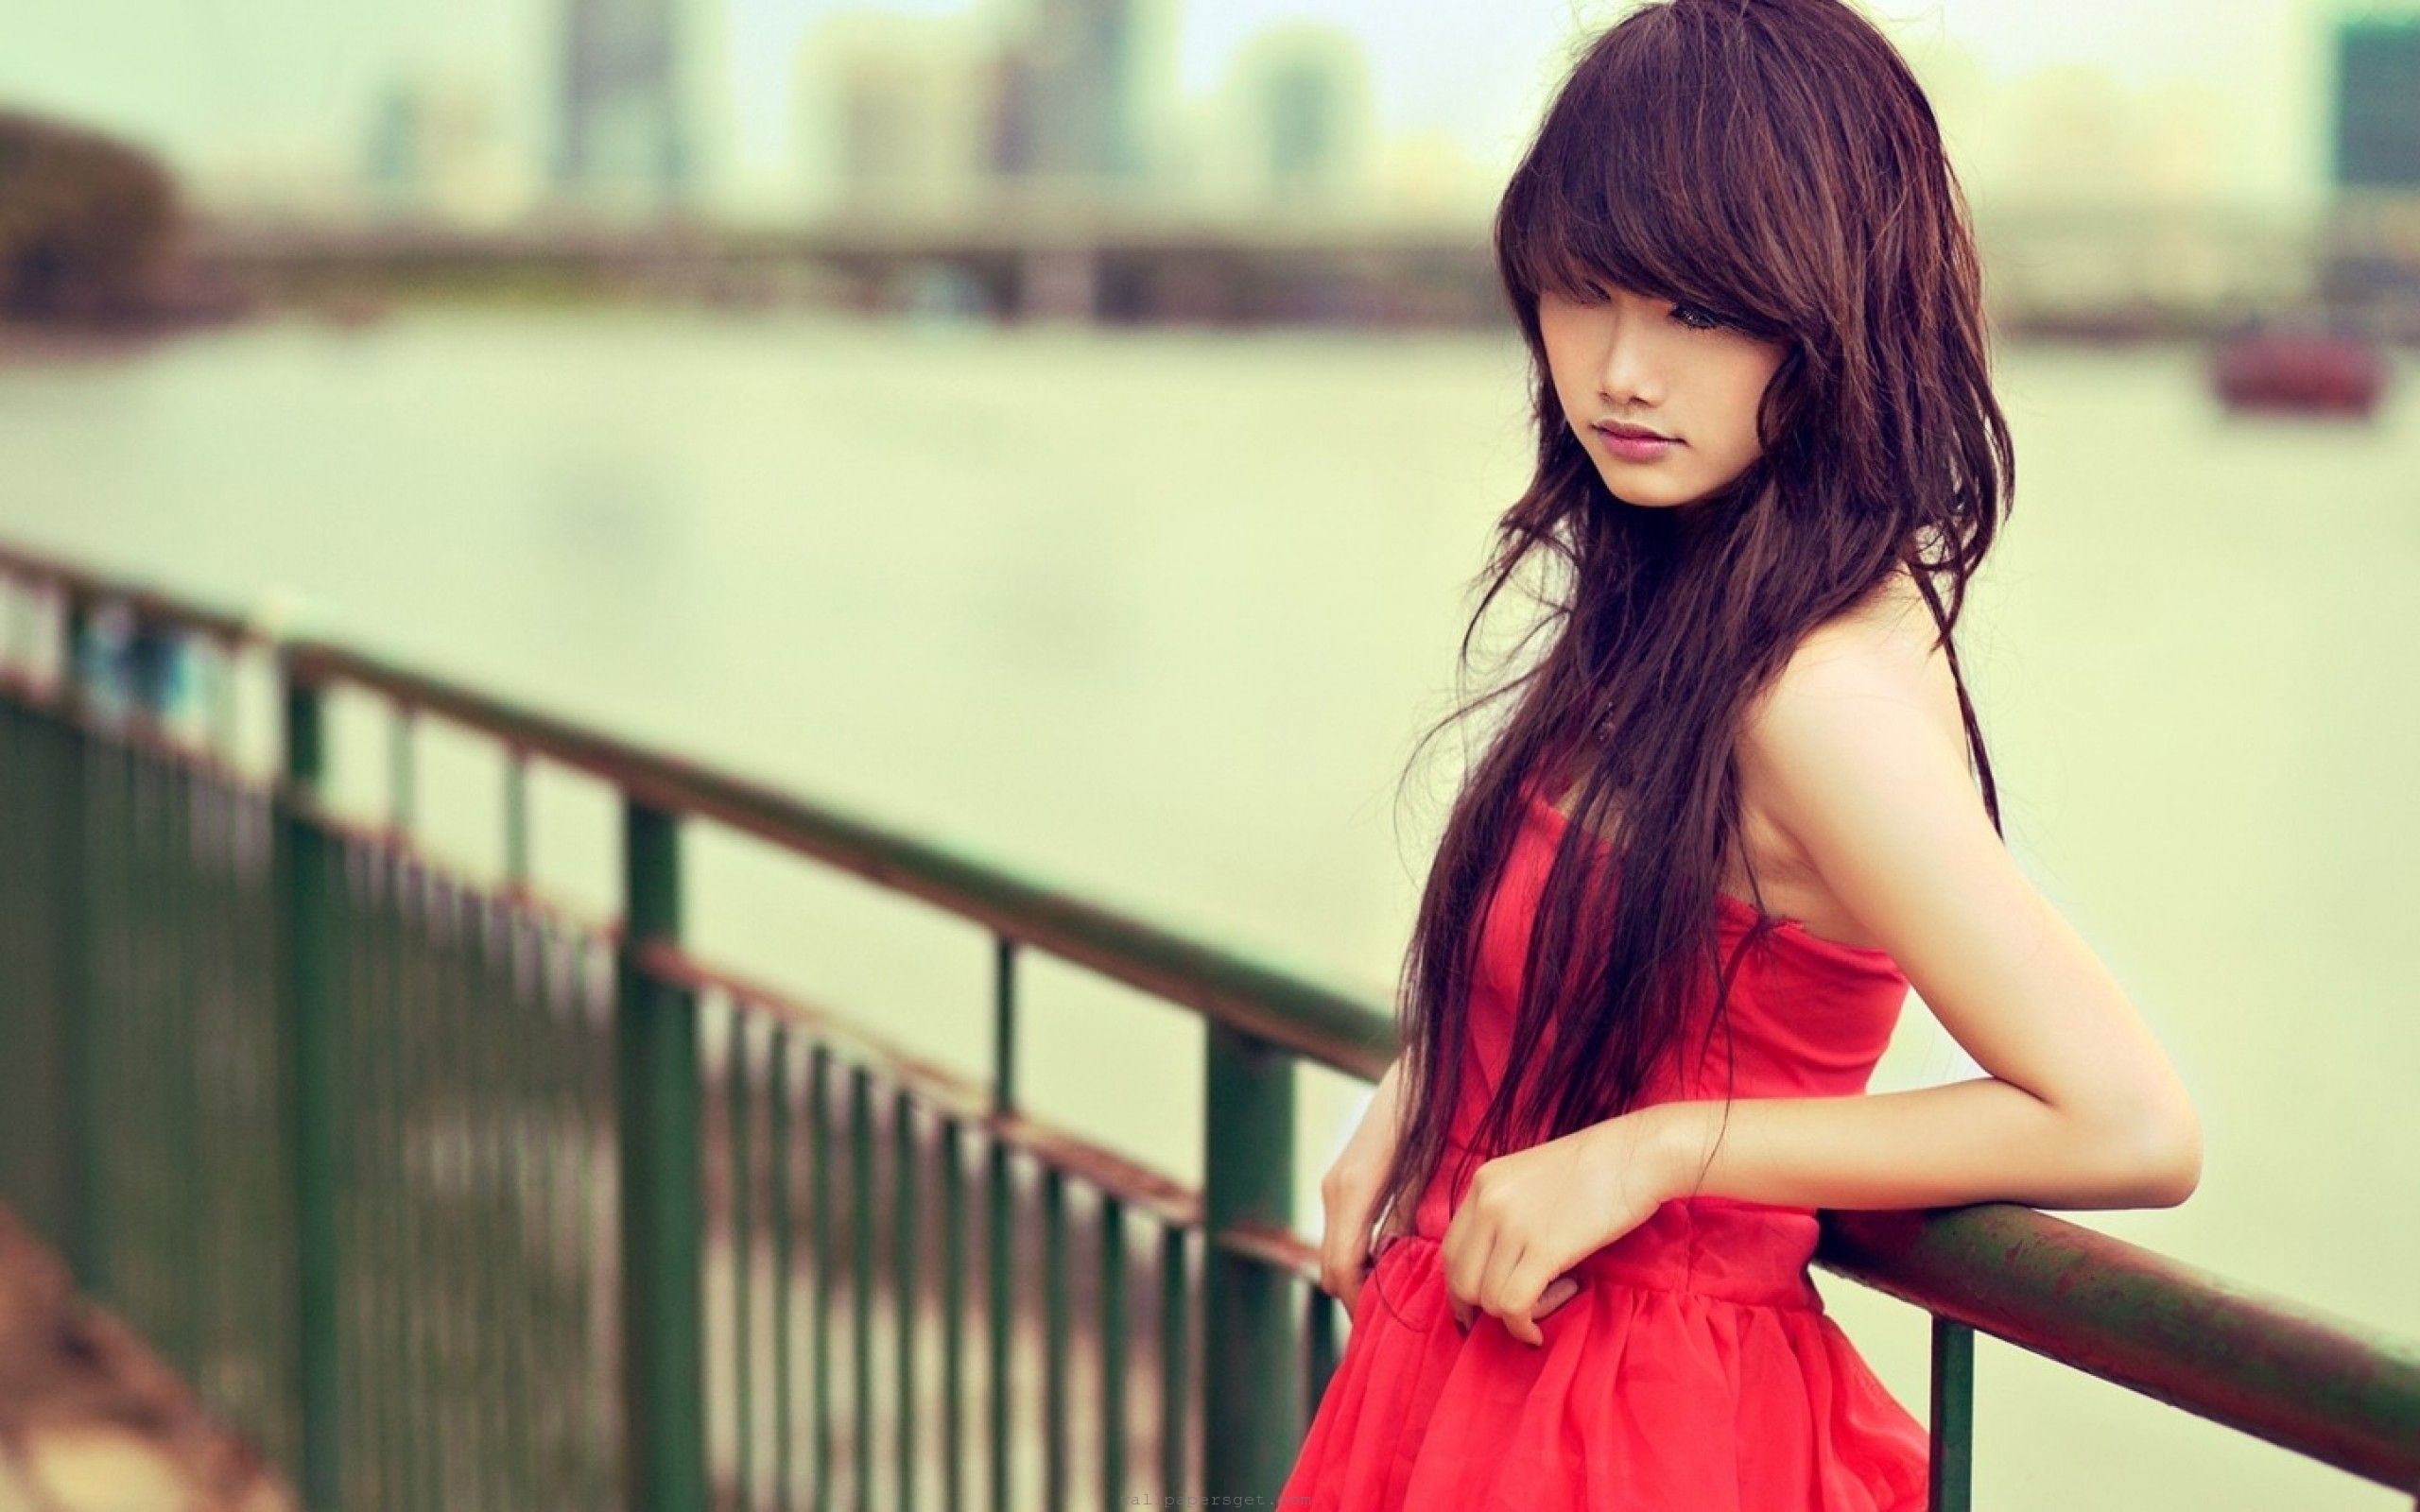 Cute And Beautiful Asian Girls Wallpapers Full HD Free Download